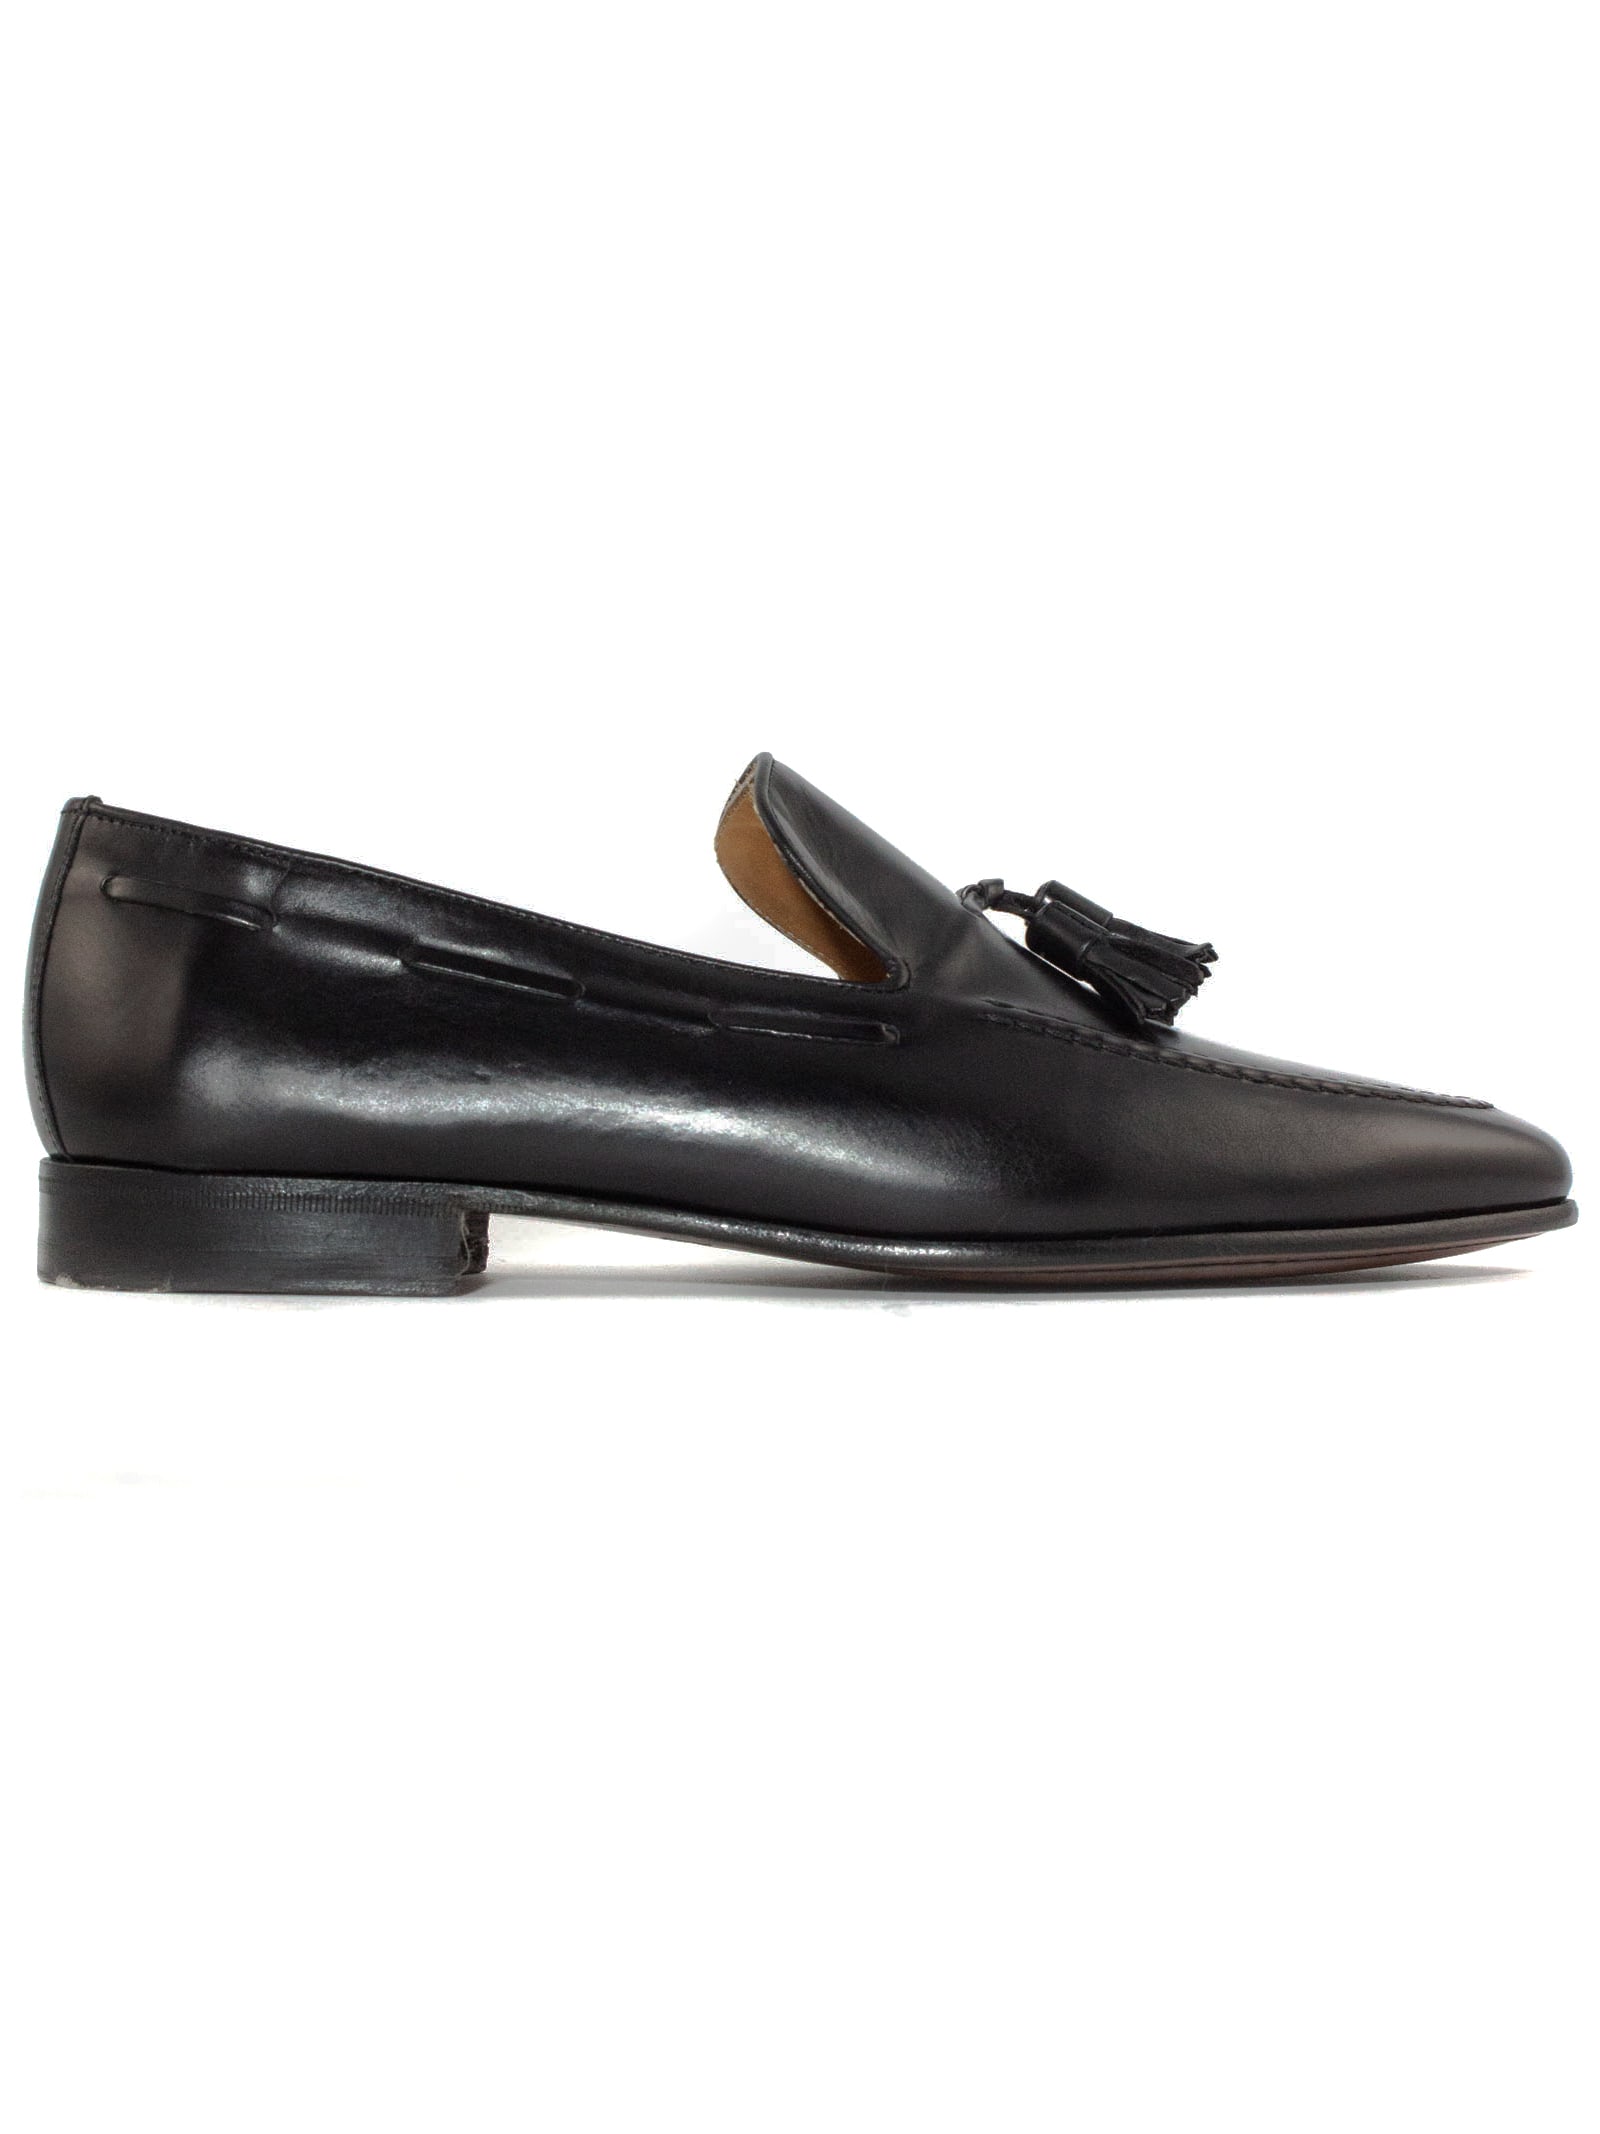 Berwick 1707 Black Calf Leather Loafers